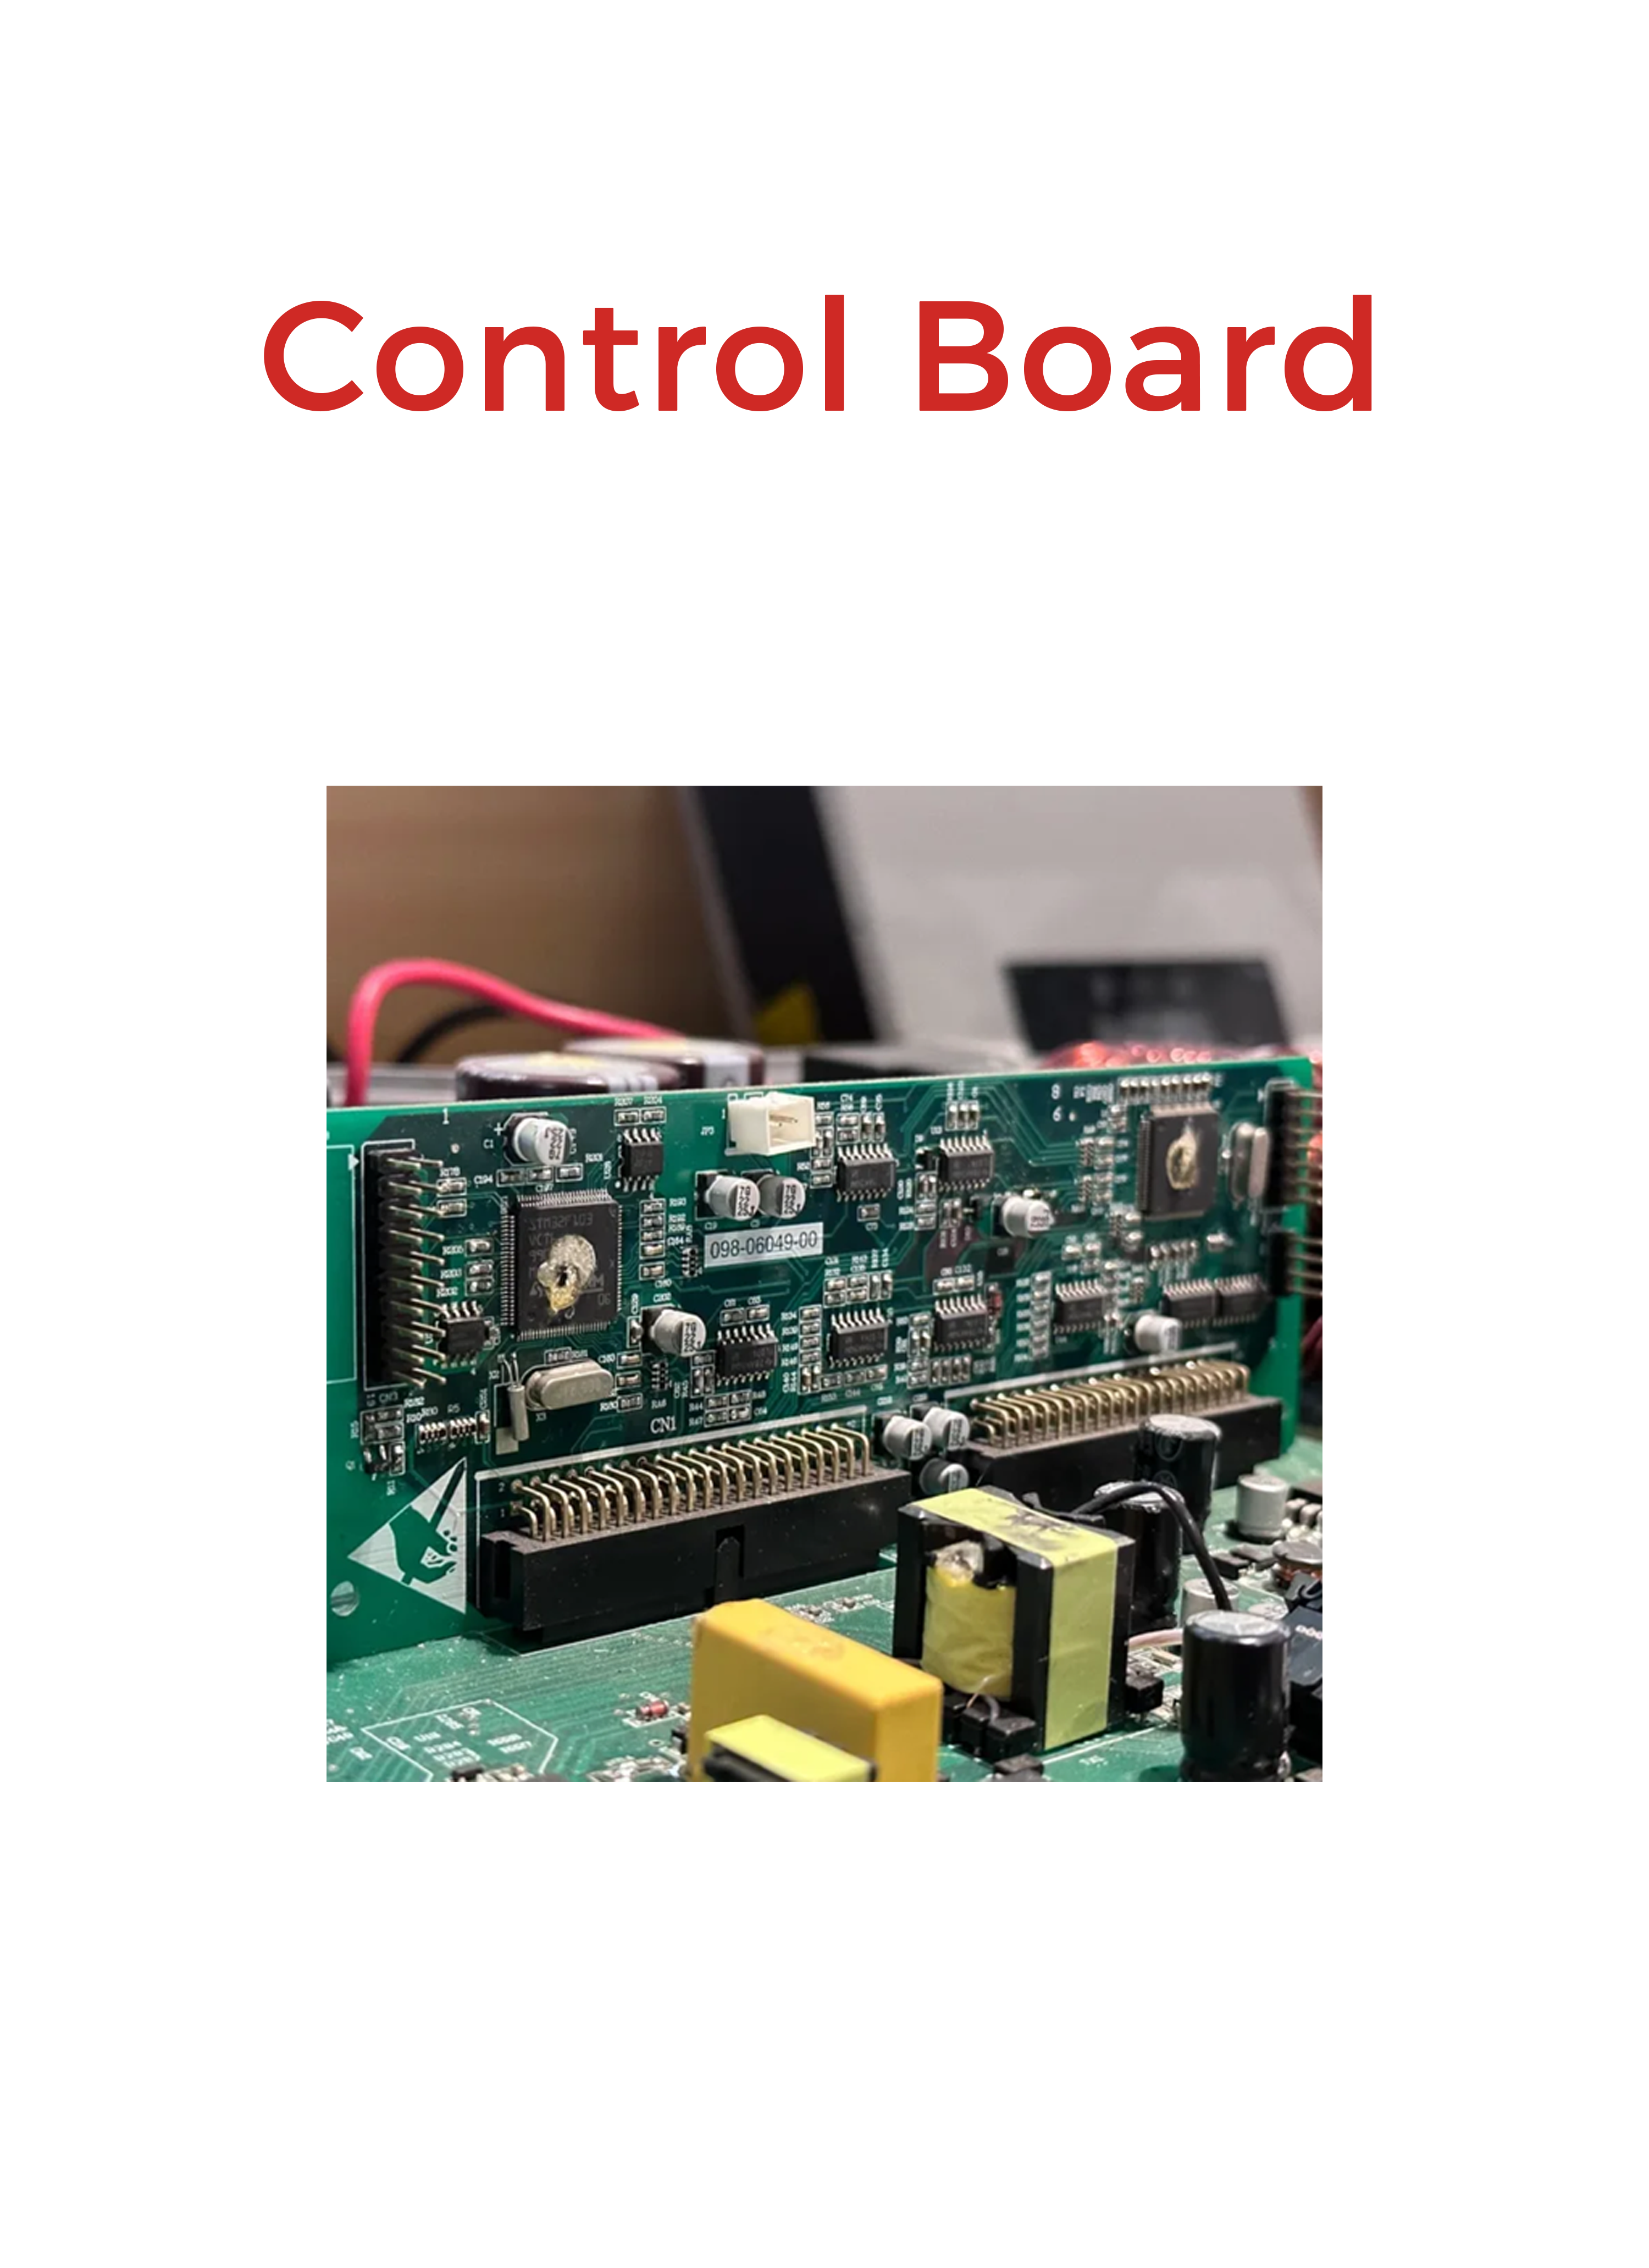 Power control board